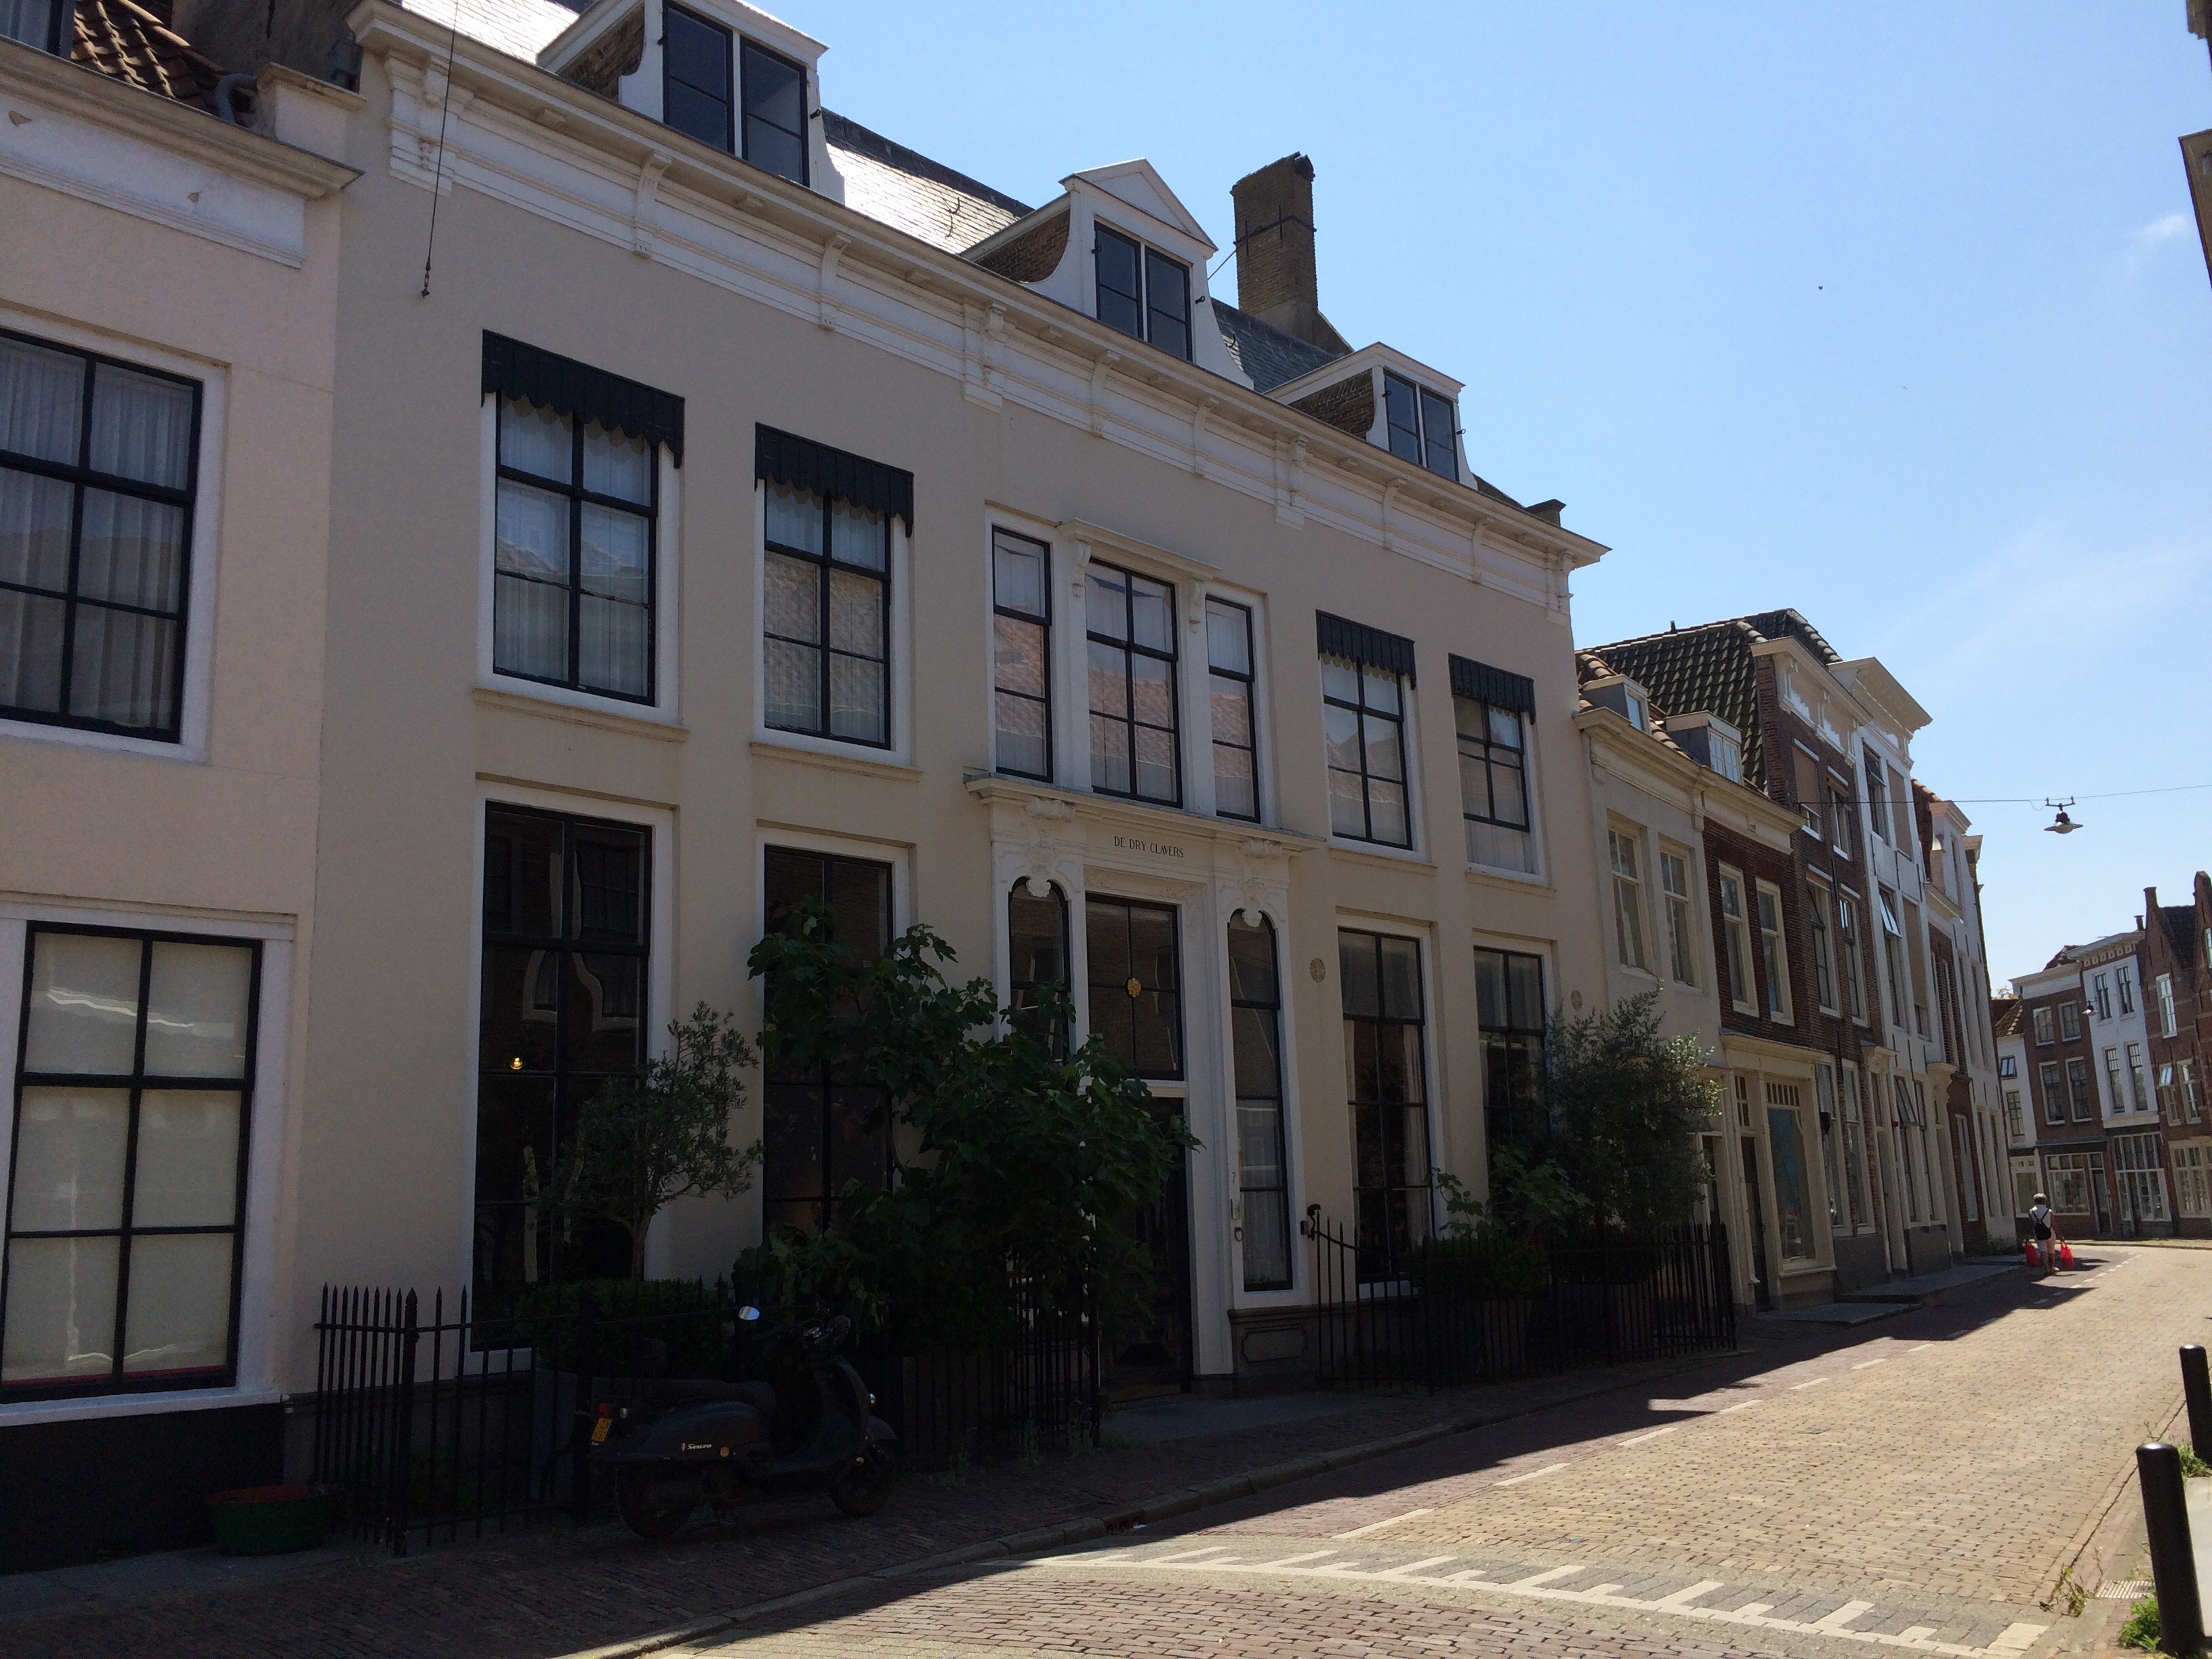 Het woonhuis van Daniël Steven Schorer in de Vlissingsestraat te Middelburg, foto: J. Francke, 17 juli 2018.